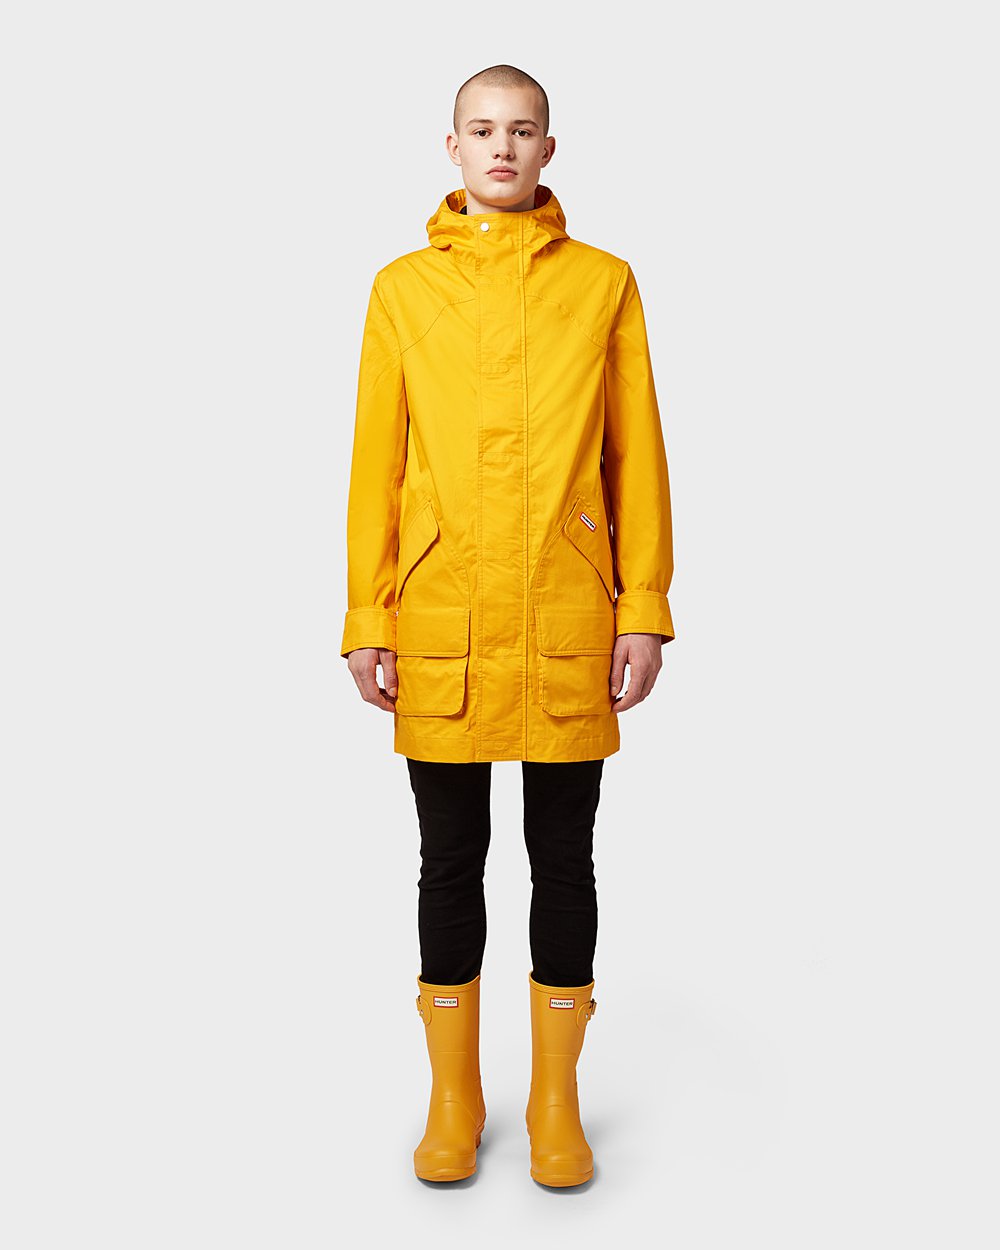 Mens Short Rain Boots - Hunter Original (71YQNAIUO) - Yellow